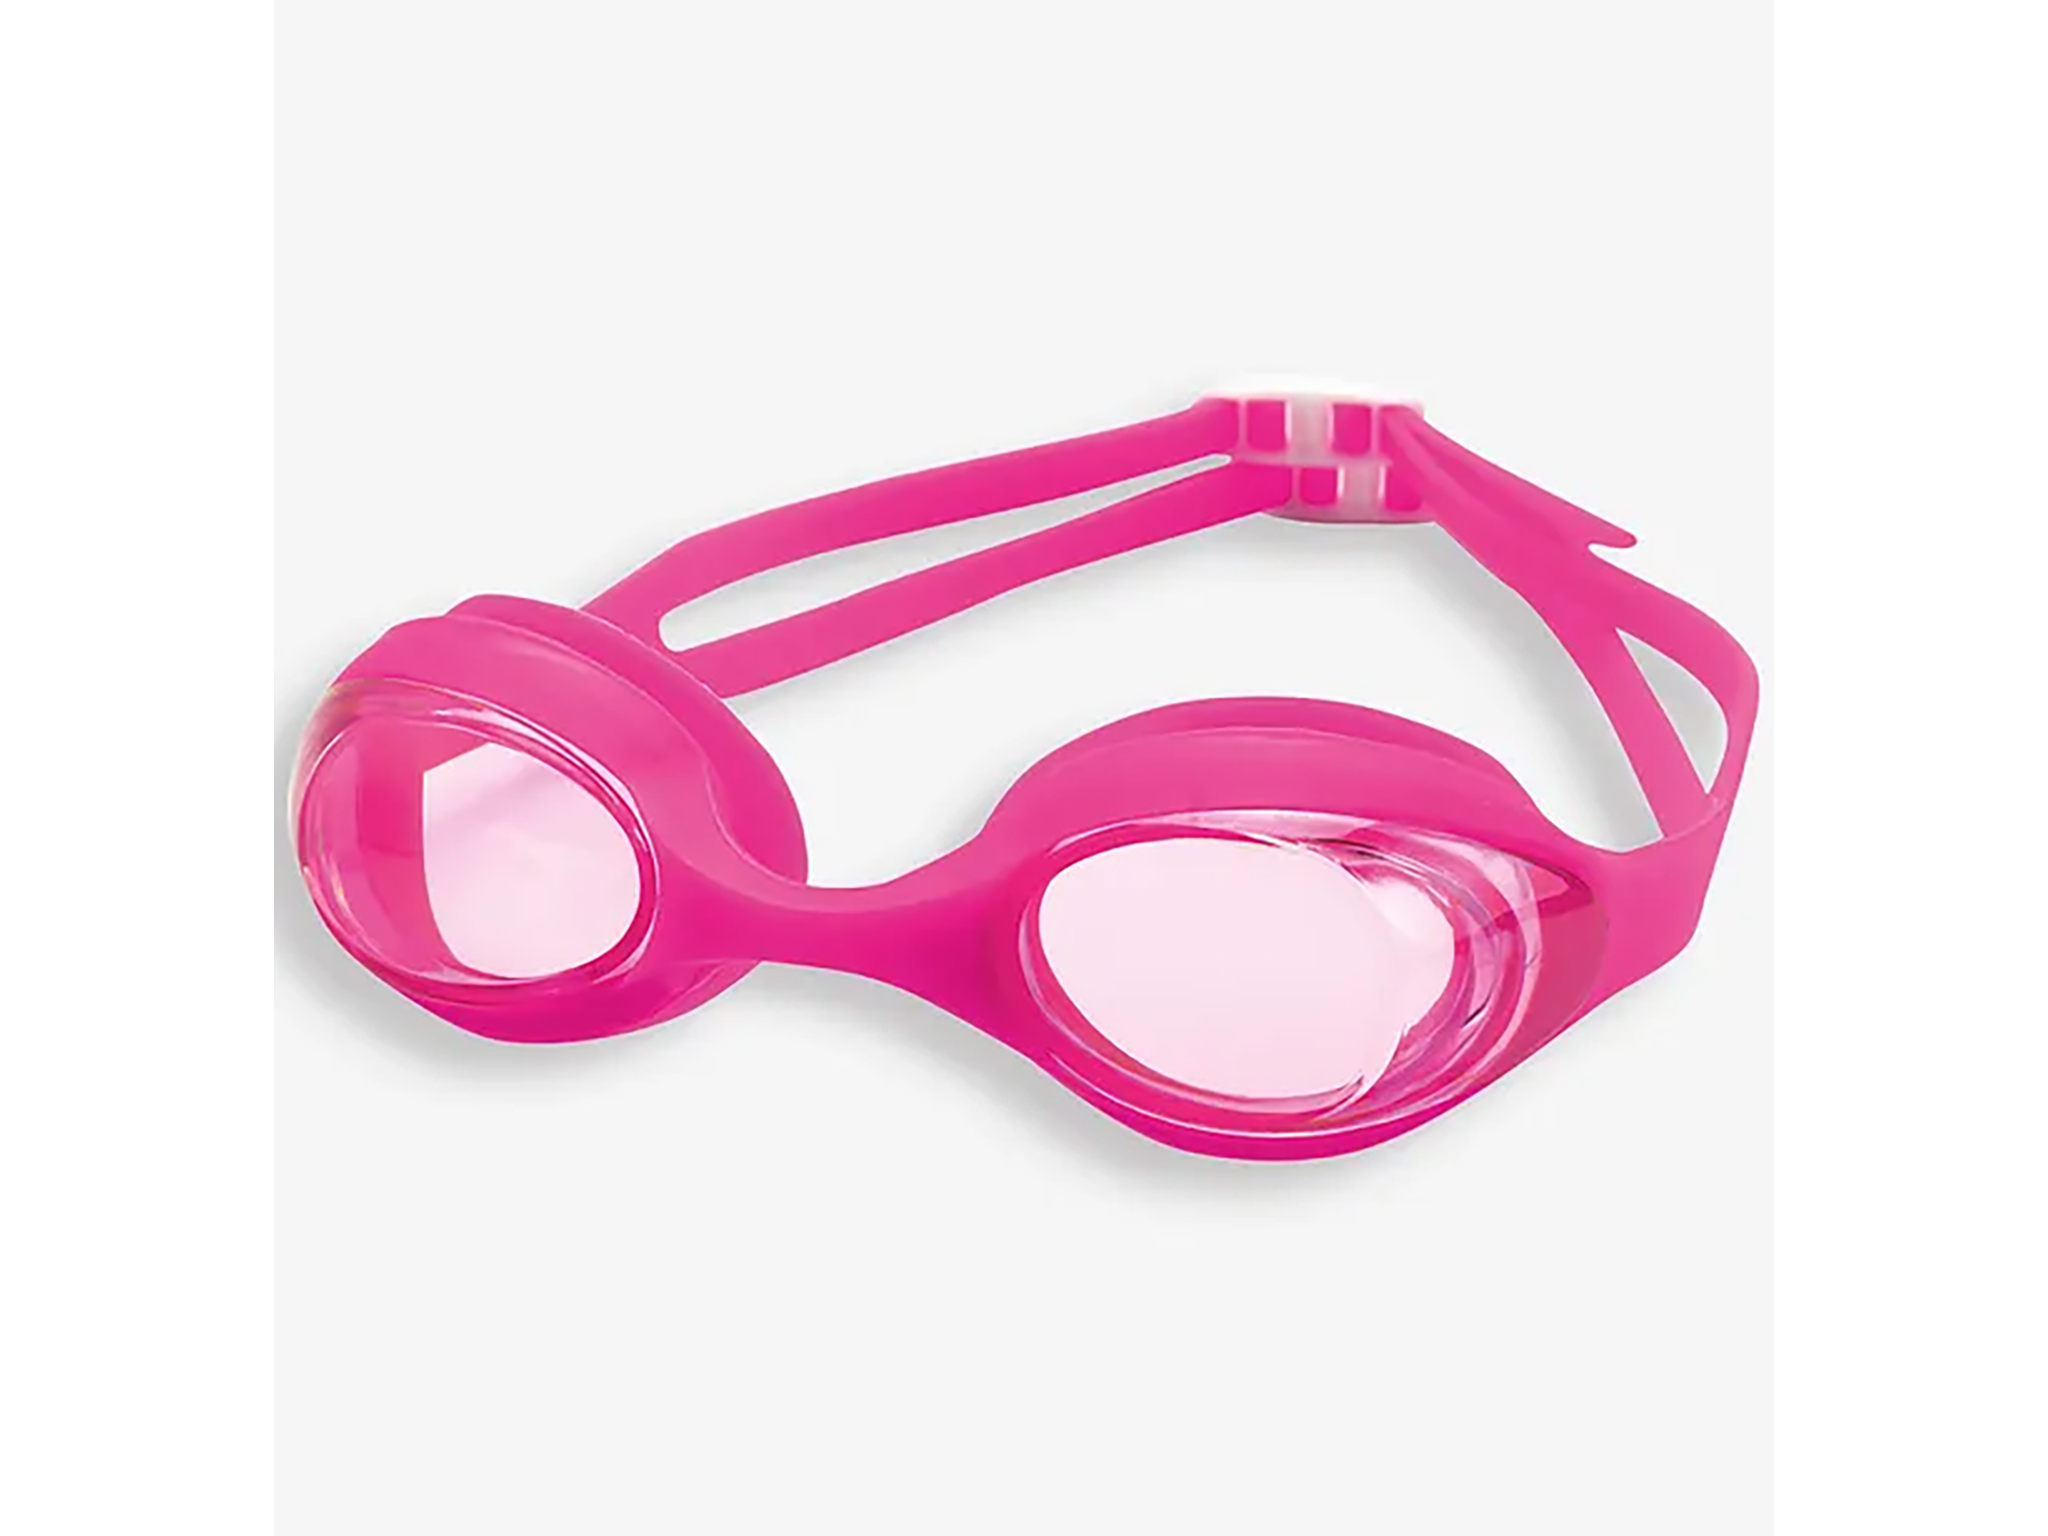 Vintage original 1980s Swedish Style Speedo Swimming Goggles 